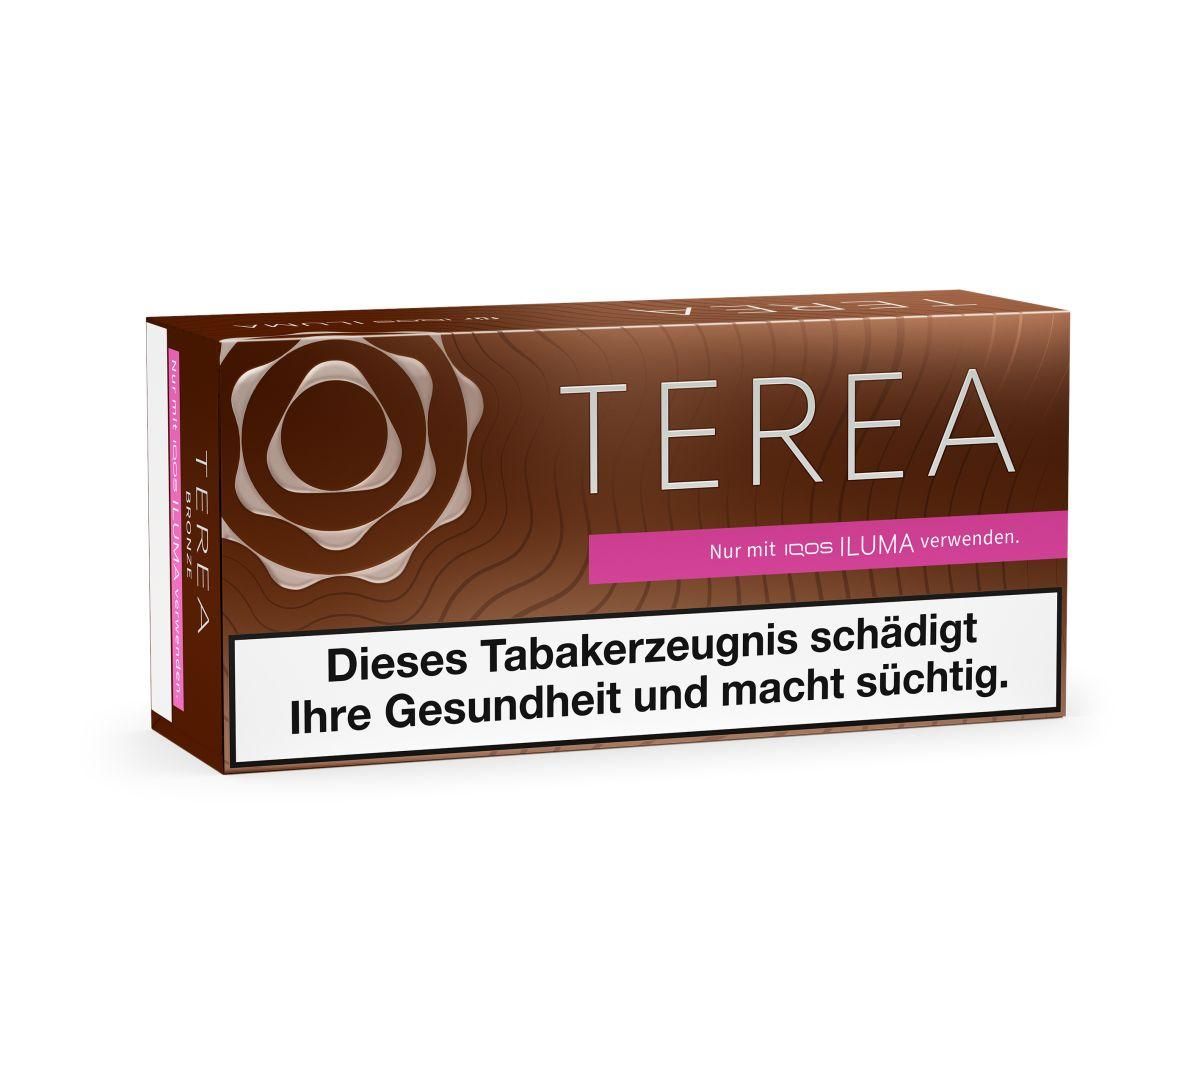 10 x IQOS Terea - Bronze Tabaksticks für IQOS ILUMA / ILUMA ONE (20 Stück)